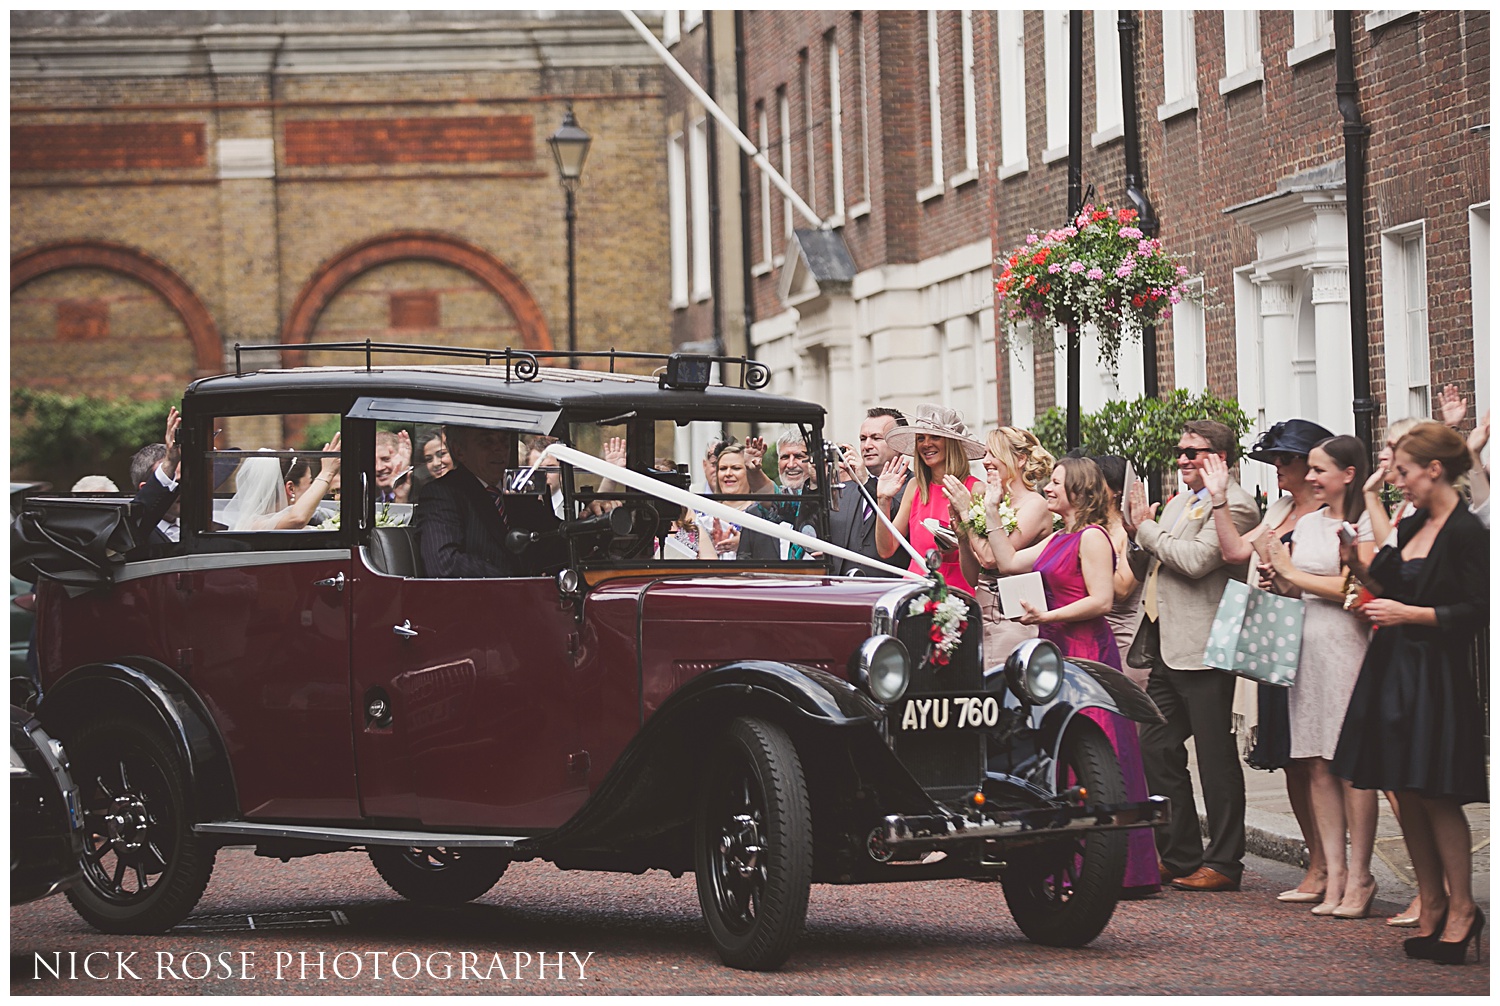 Vintage London wedding taxi